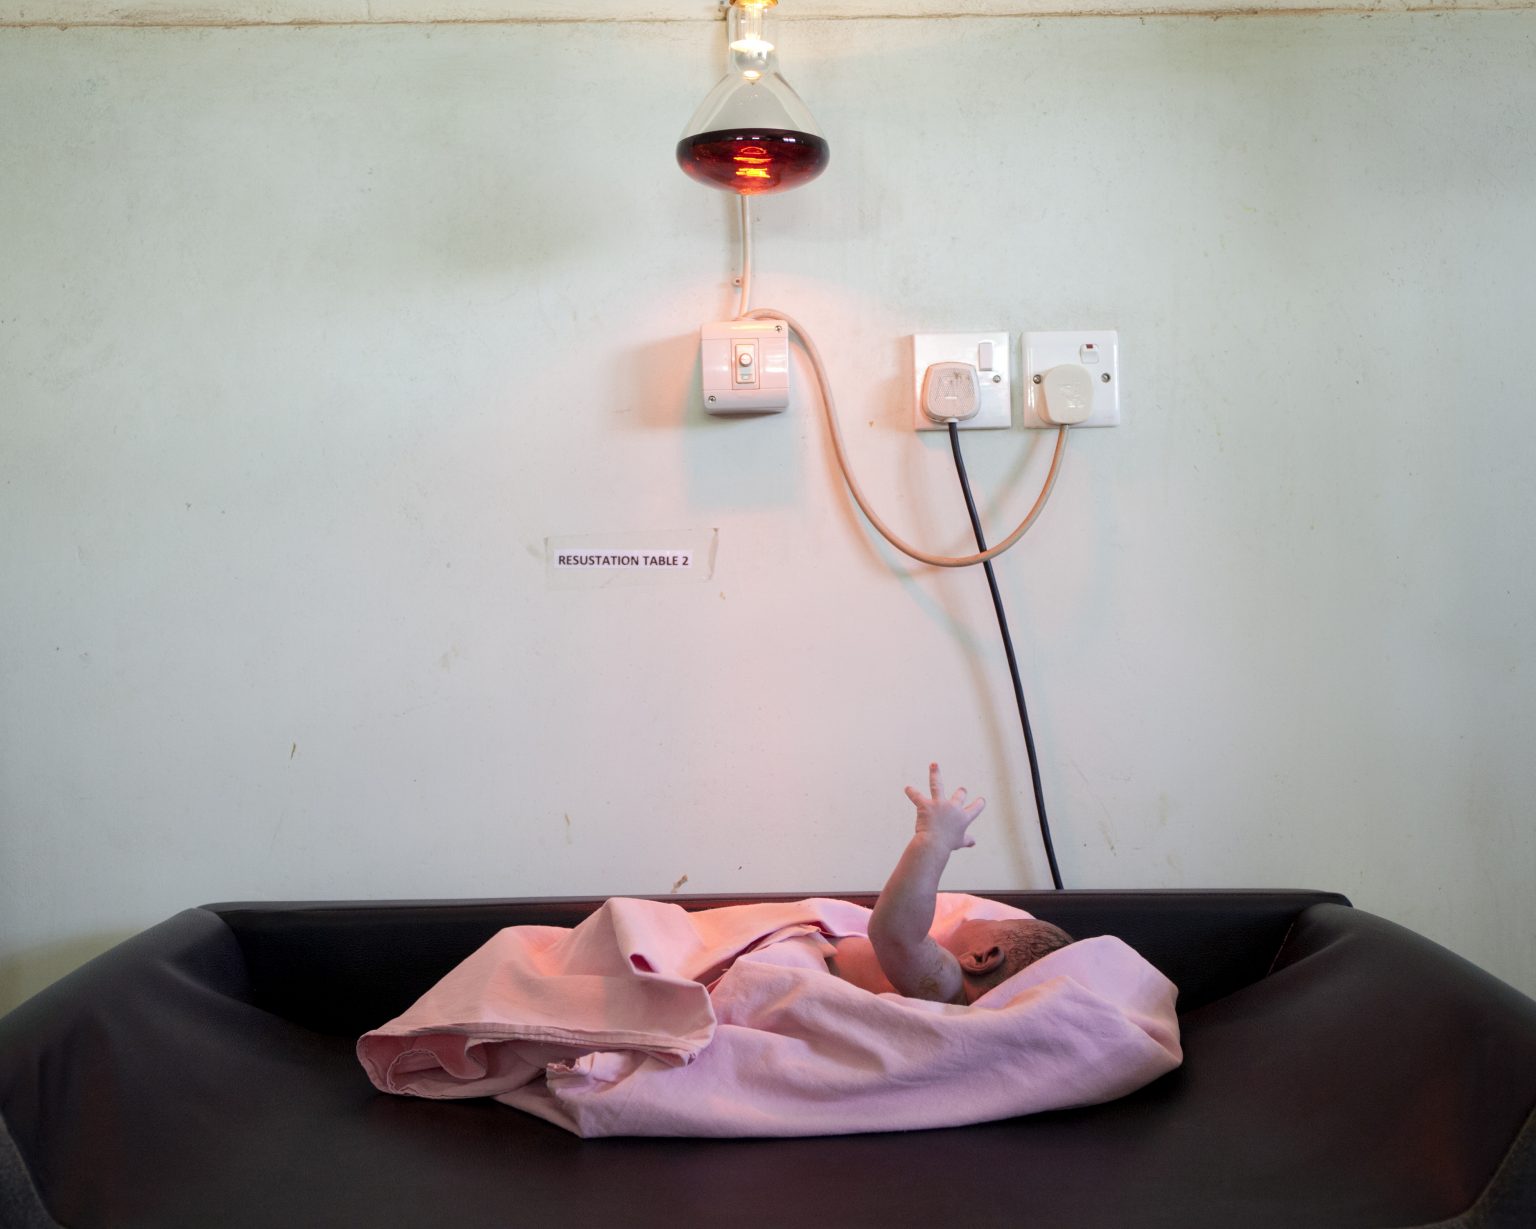 Karamoja region (Uganda). Matany Hospital: a newborn under the heat lamp in the delivery room.
><
Regione della Karamoja (Uganda). Ospedale di Matany: un neonato sotto la lampada termica in sala parto.